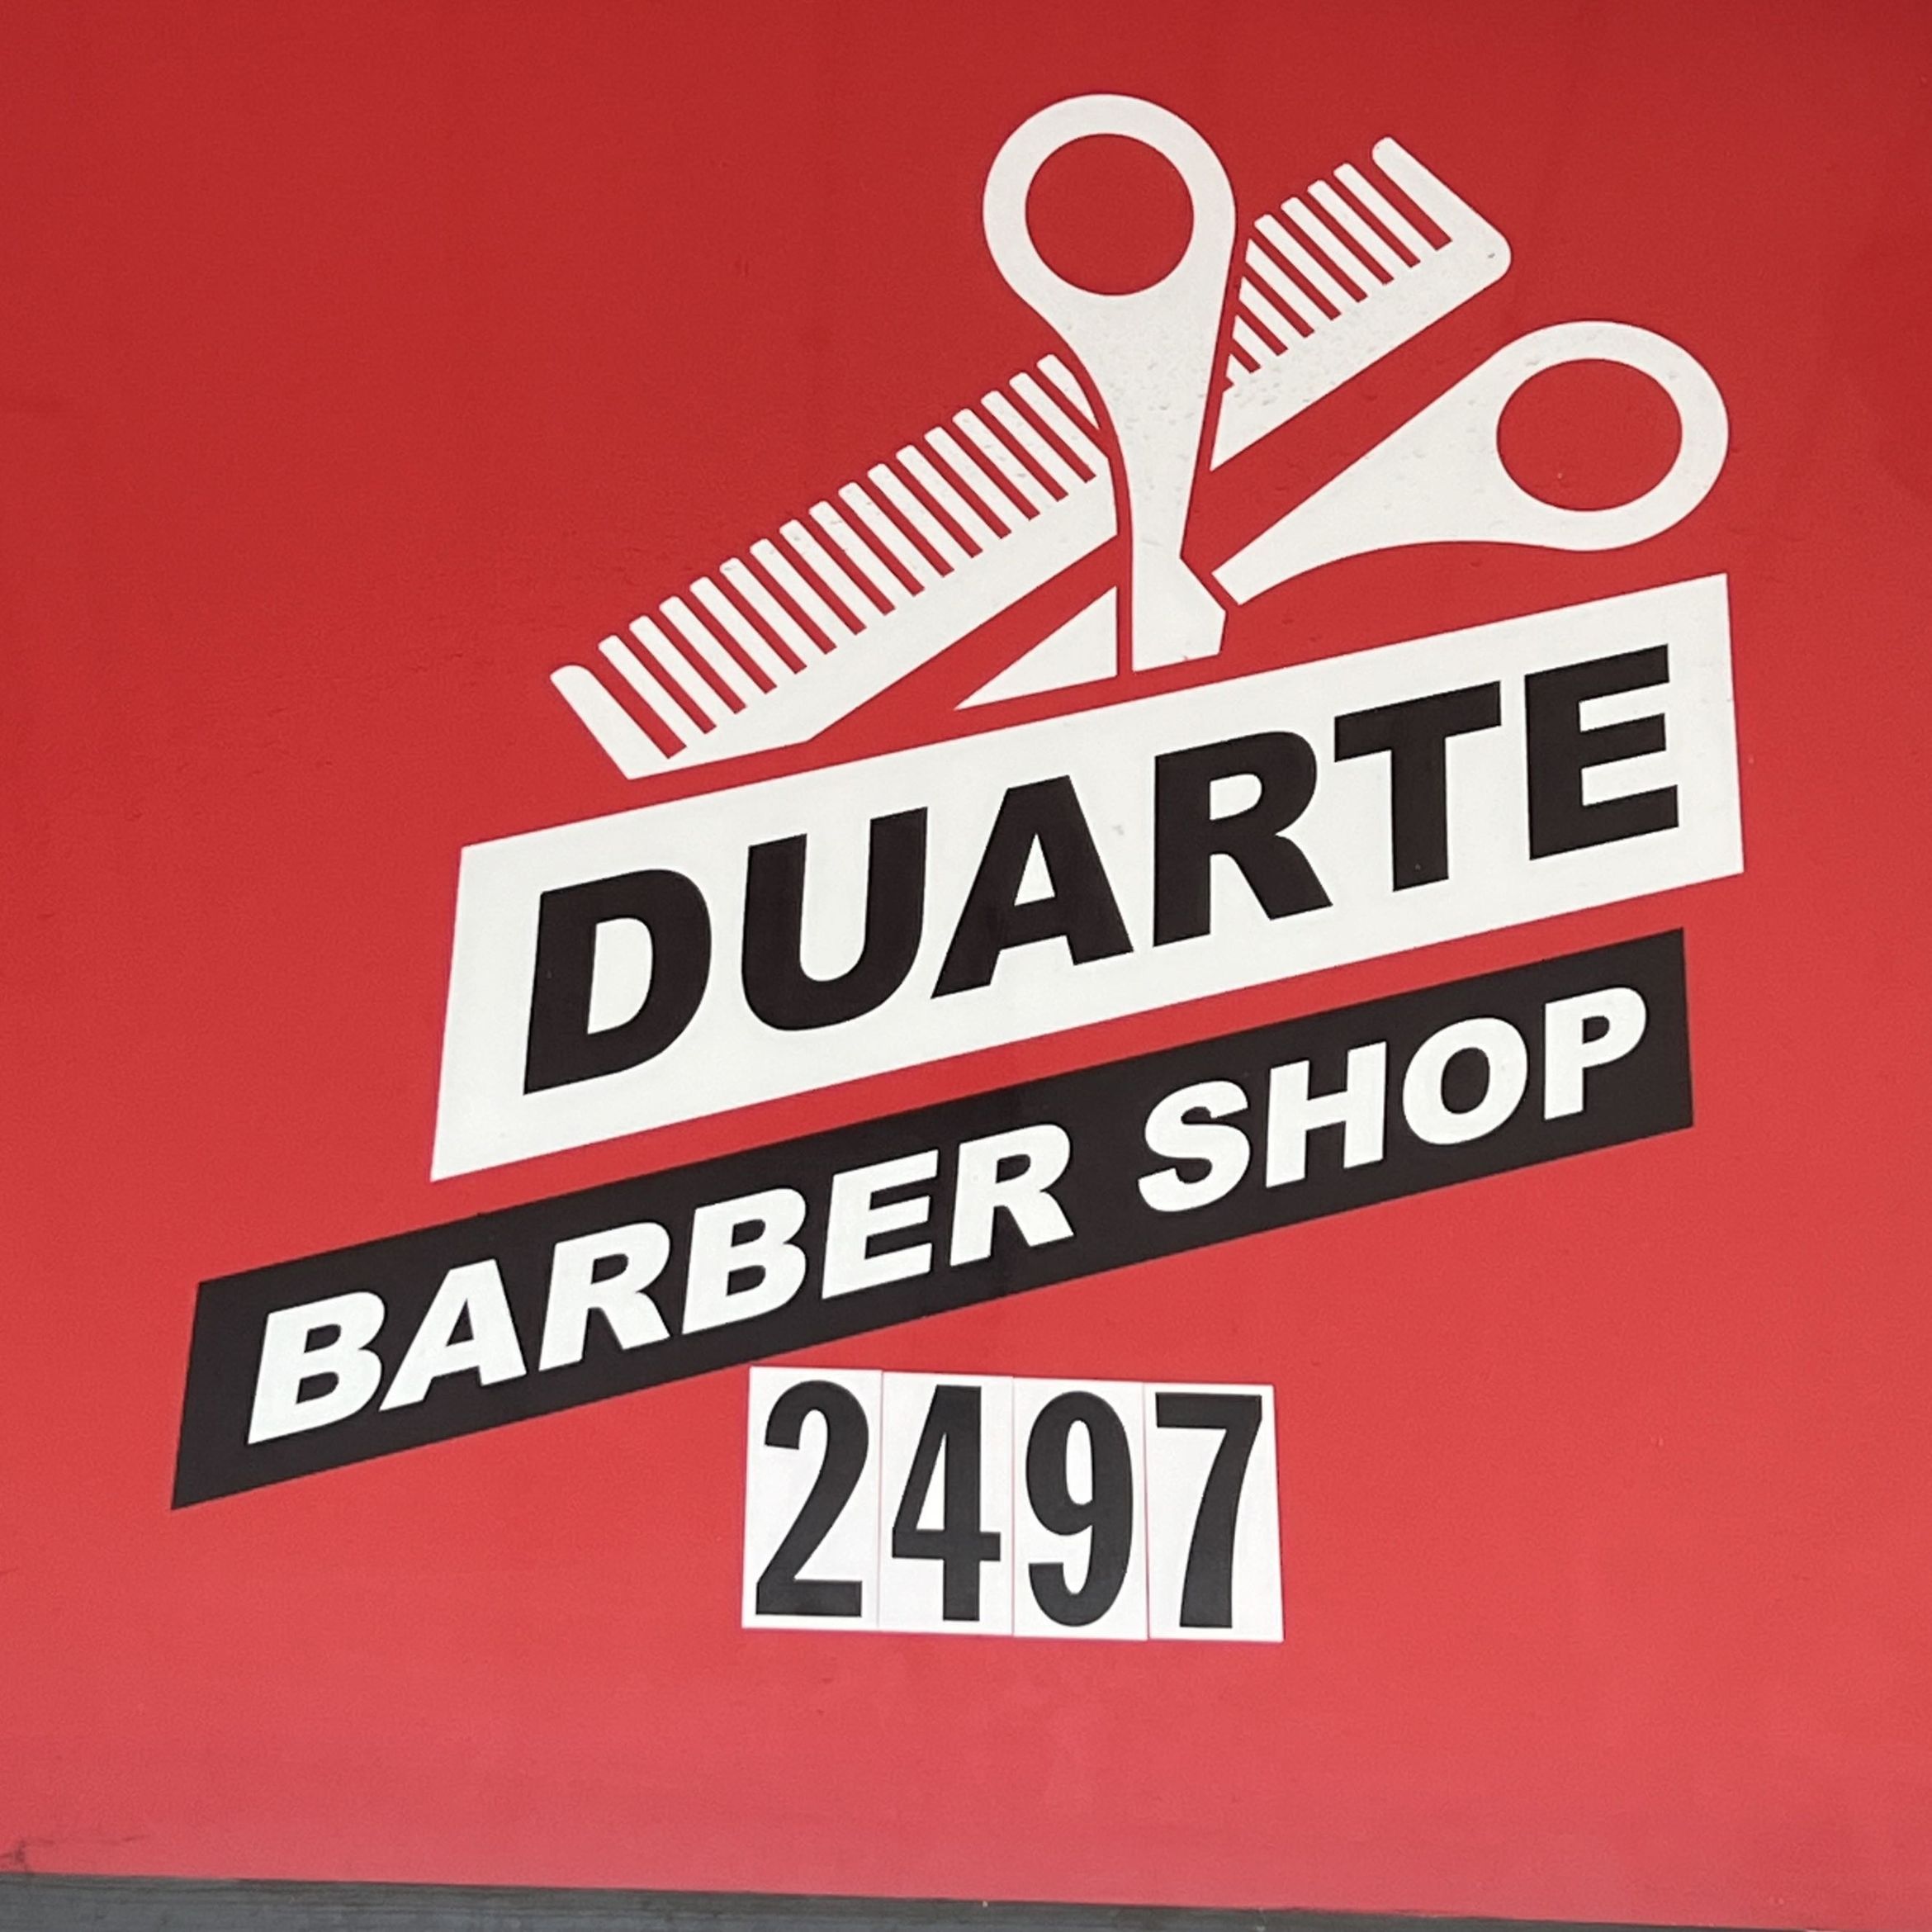 Josue The Barber, 10th Ave N, 2497, Lake Worth Beach, 33461